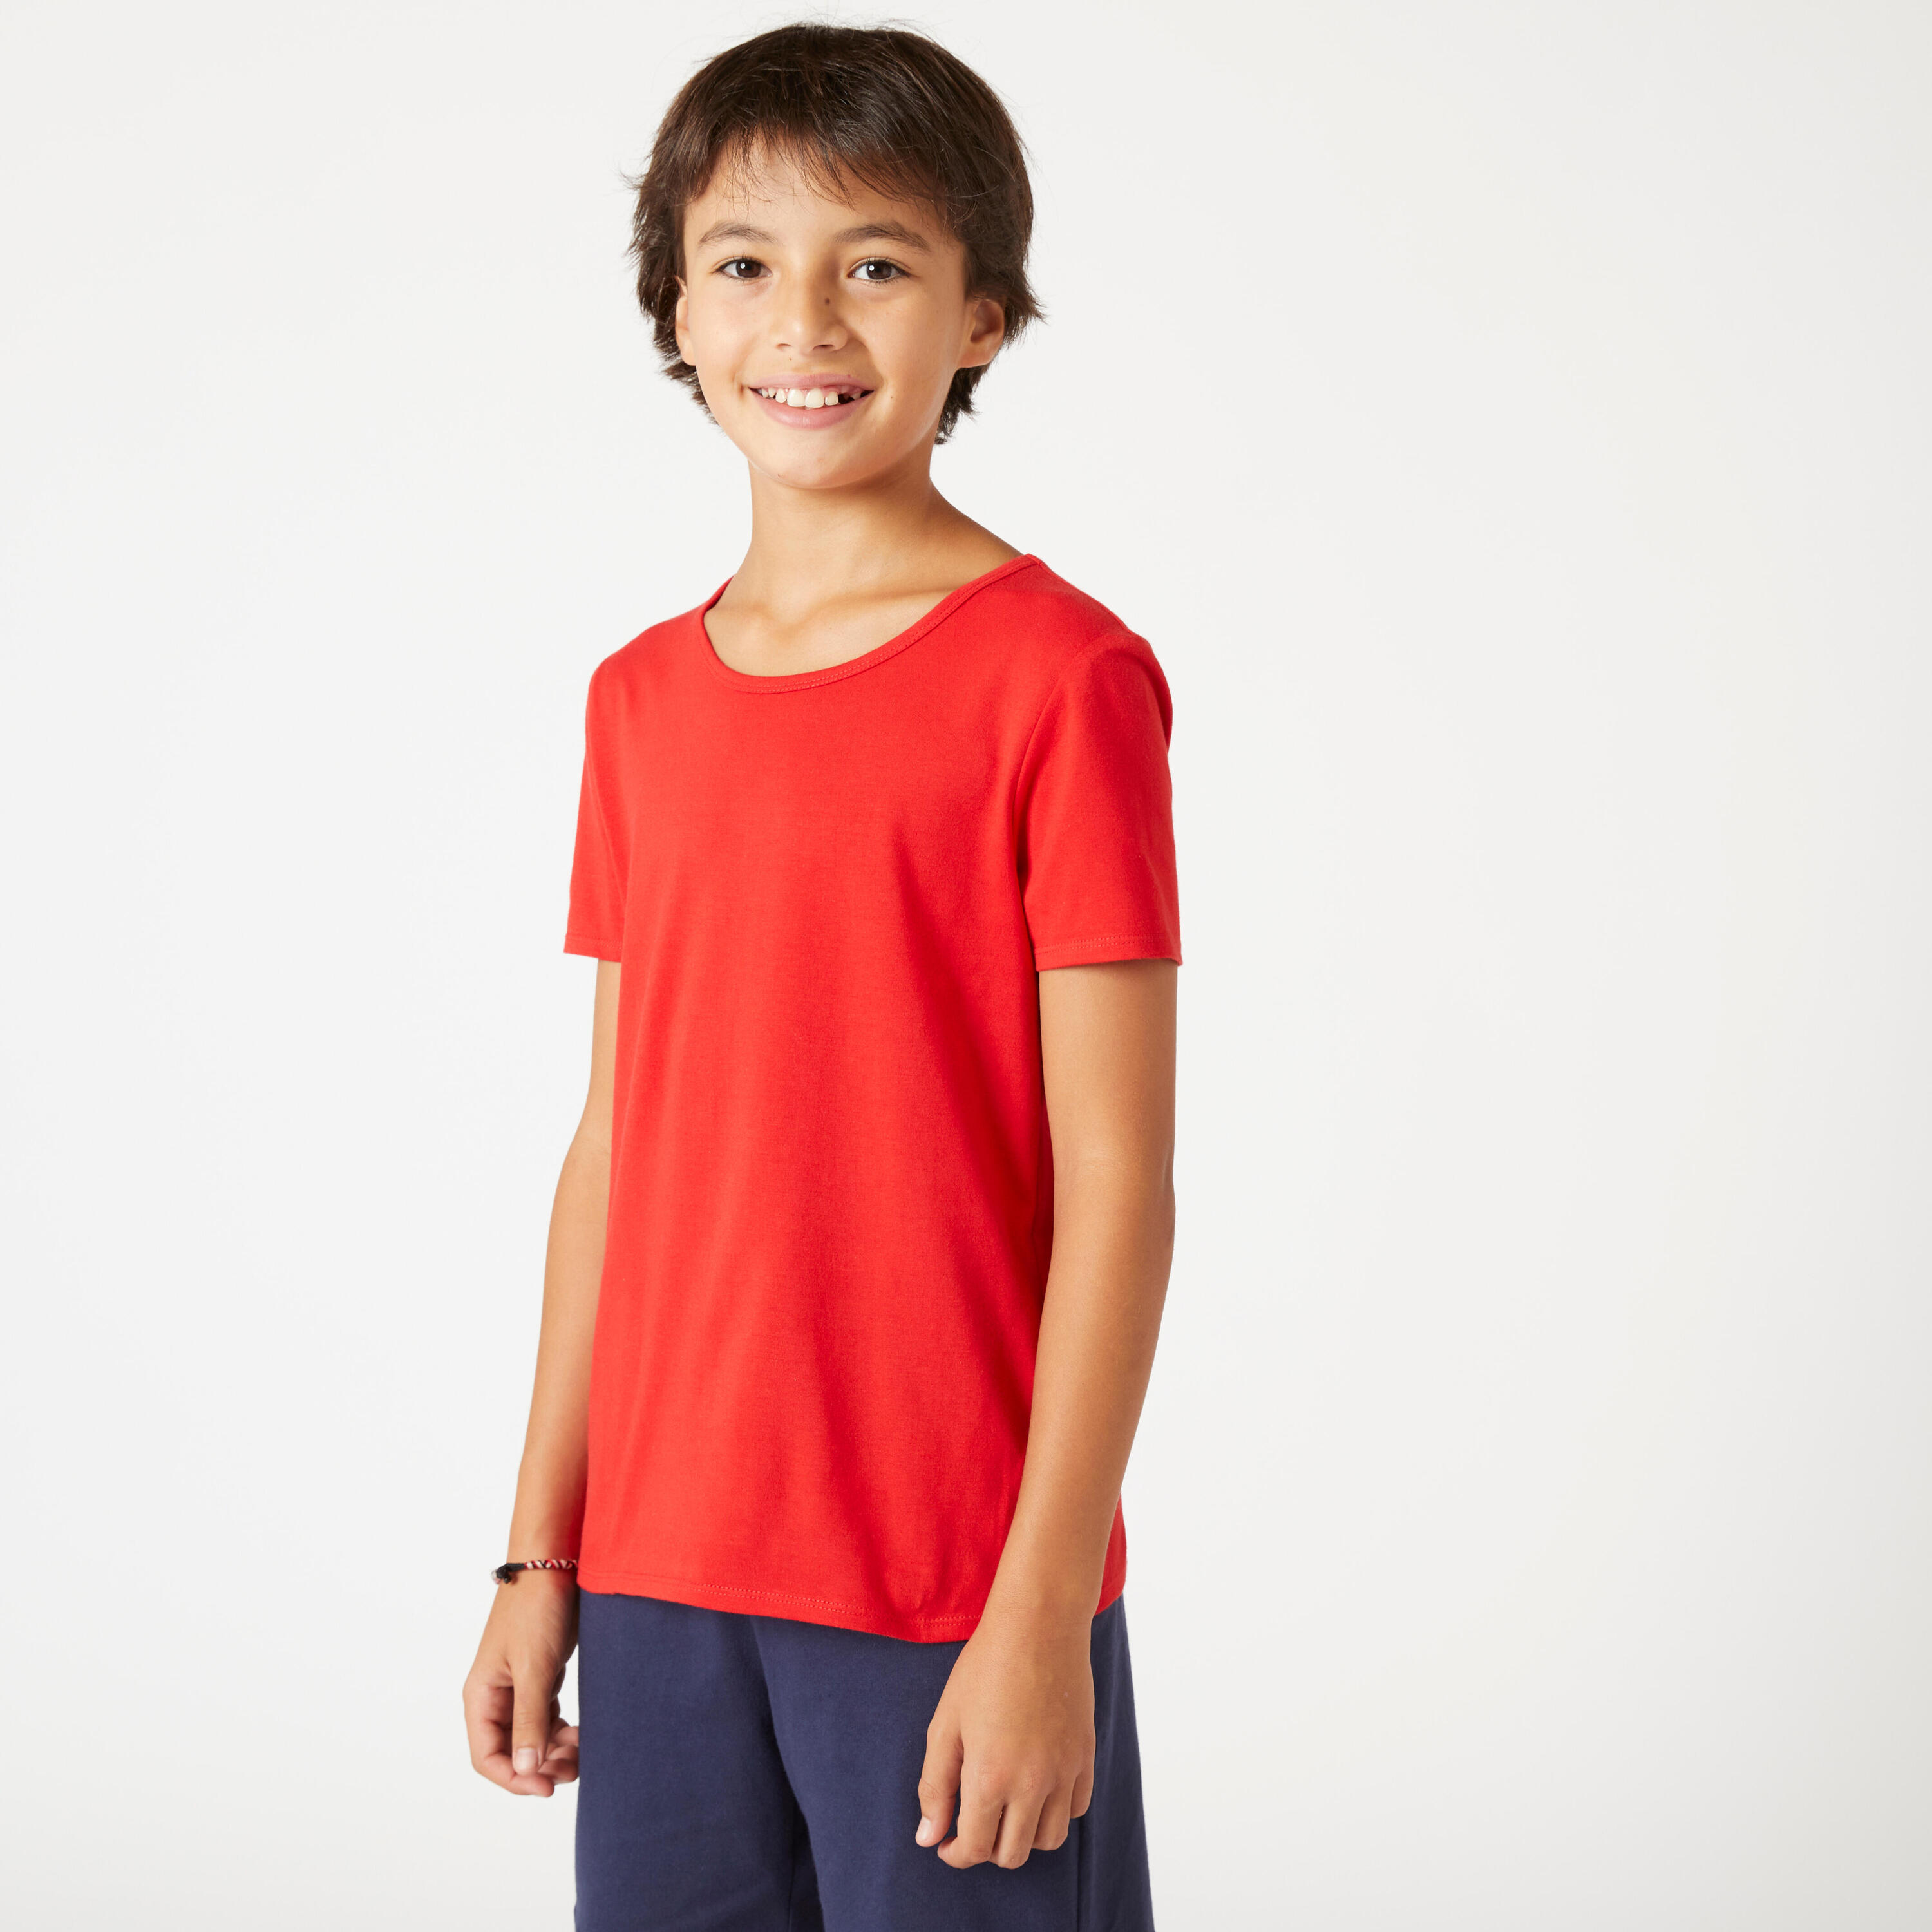 Kids' Basic Cotton T-Shirt - Red 1/4